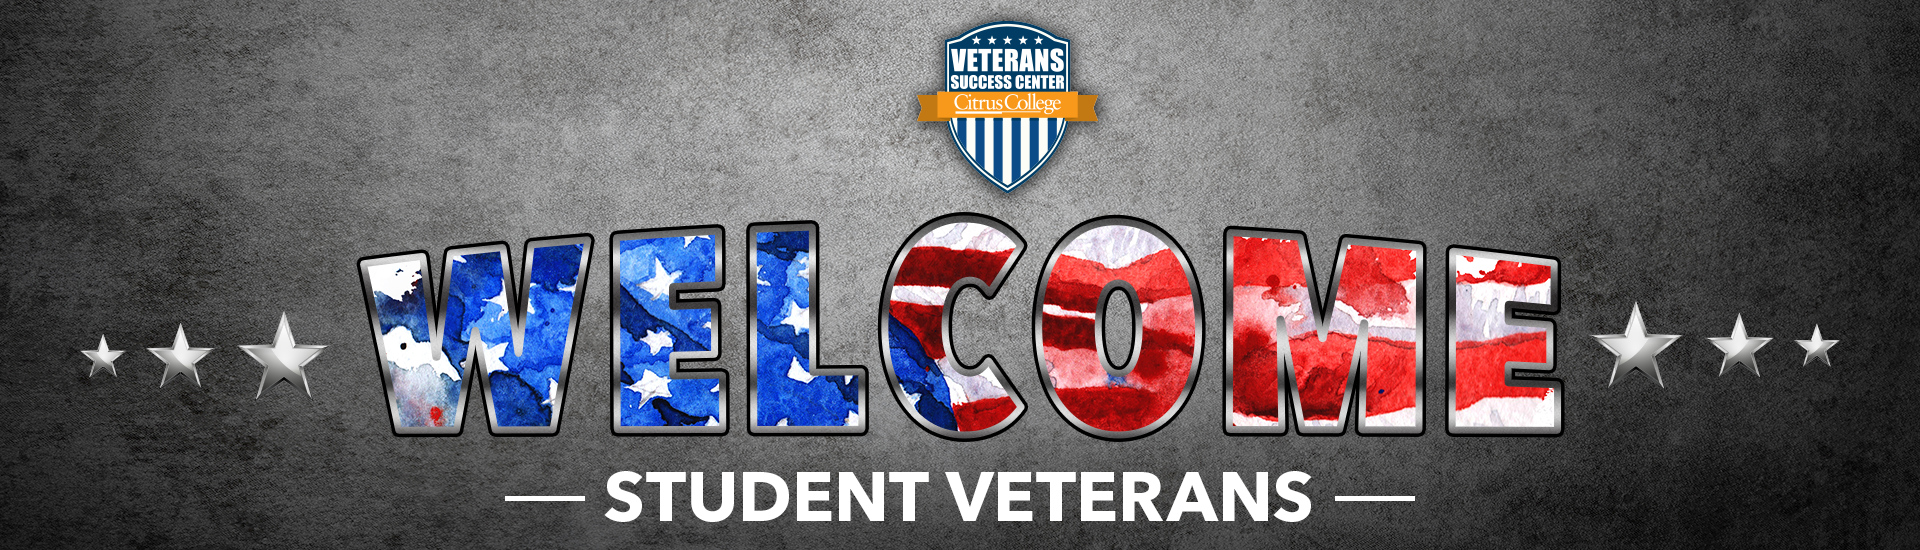 Welcome student veterans to the Citrus College Veterans Success Center